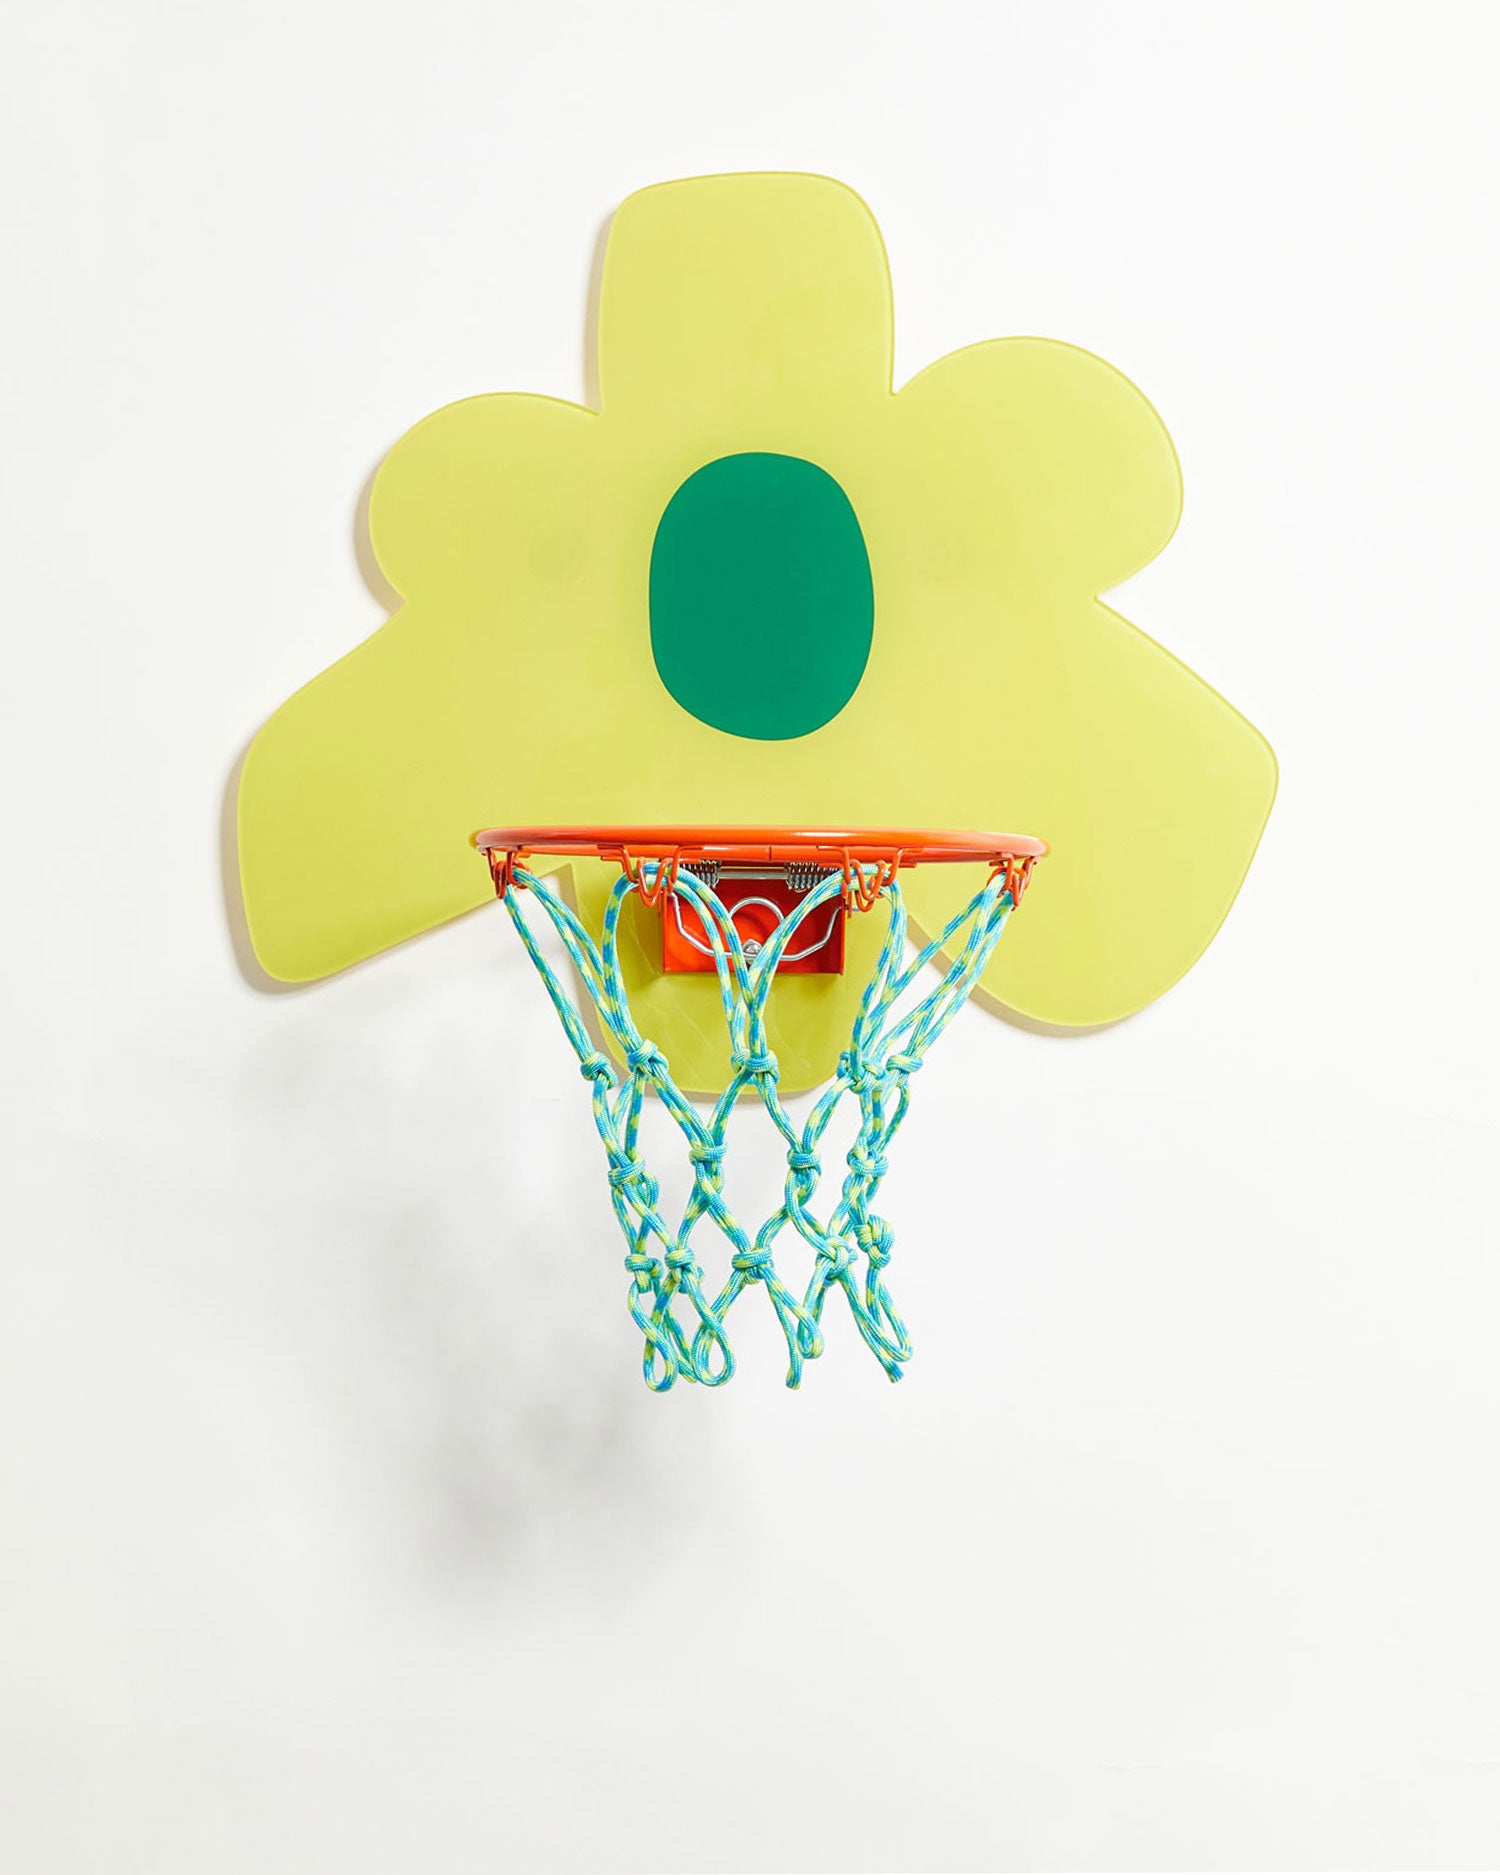 mini basketball hoop